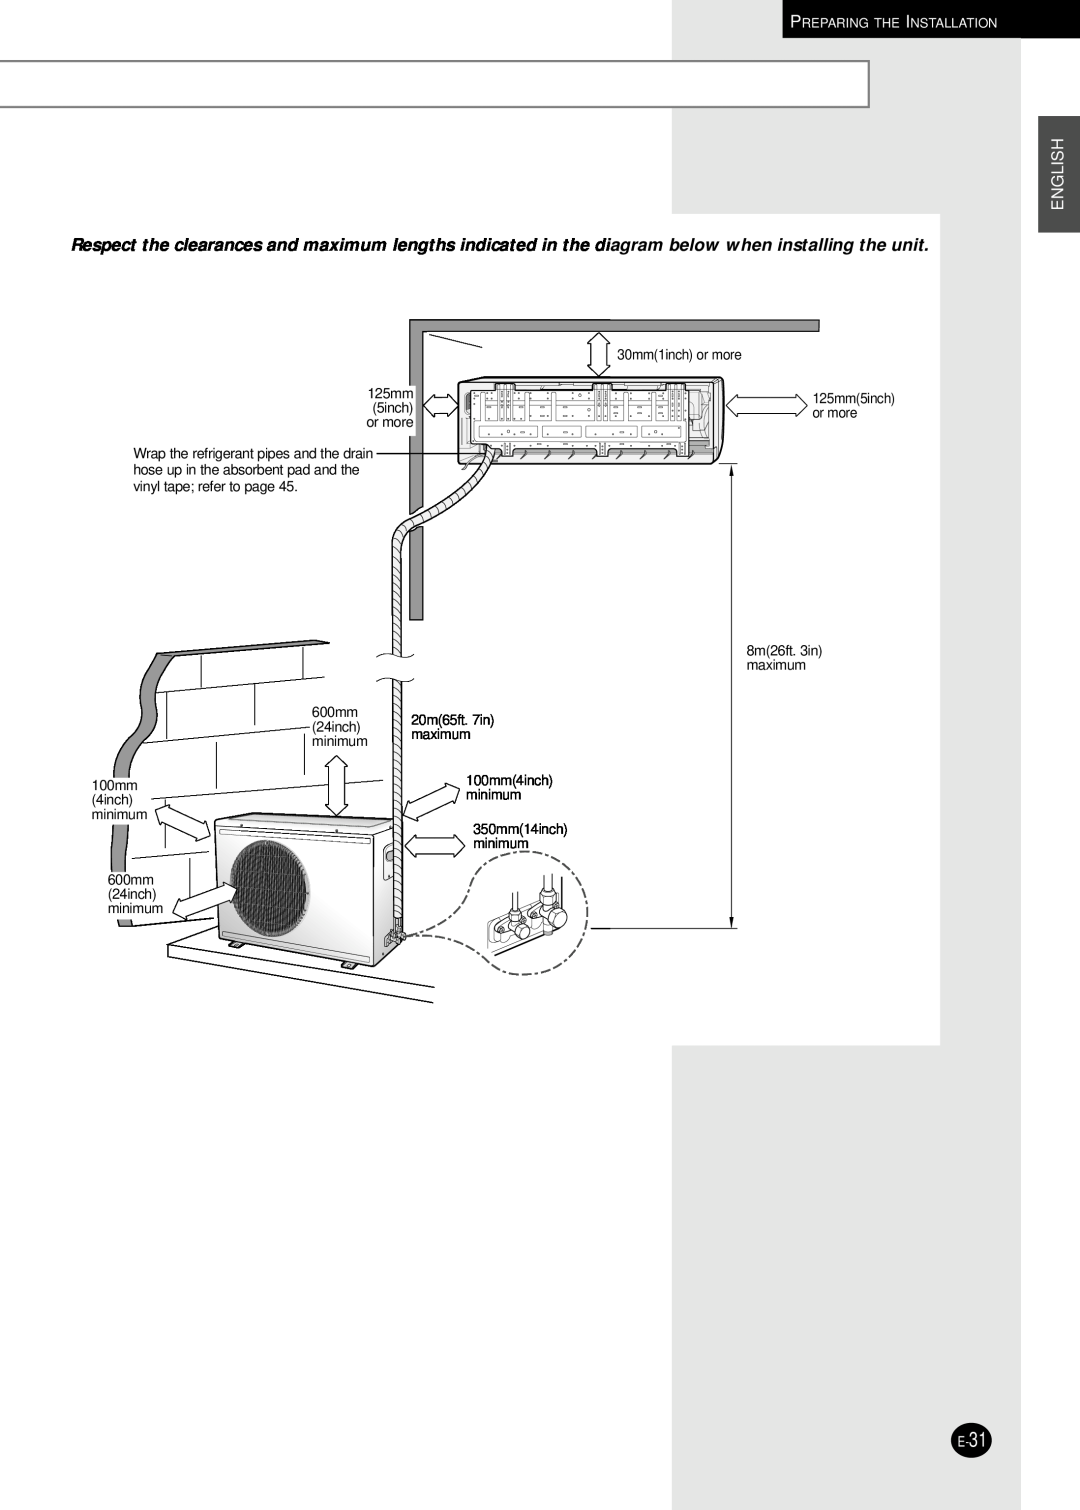 Samsung AQ30C1(2)BC installation manual English, E-31 